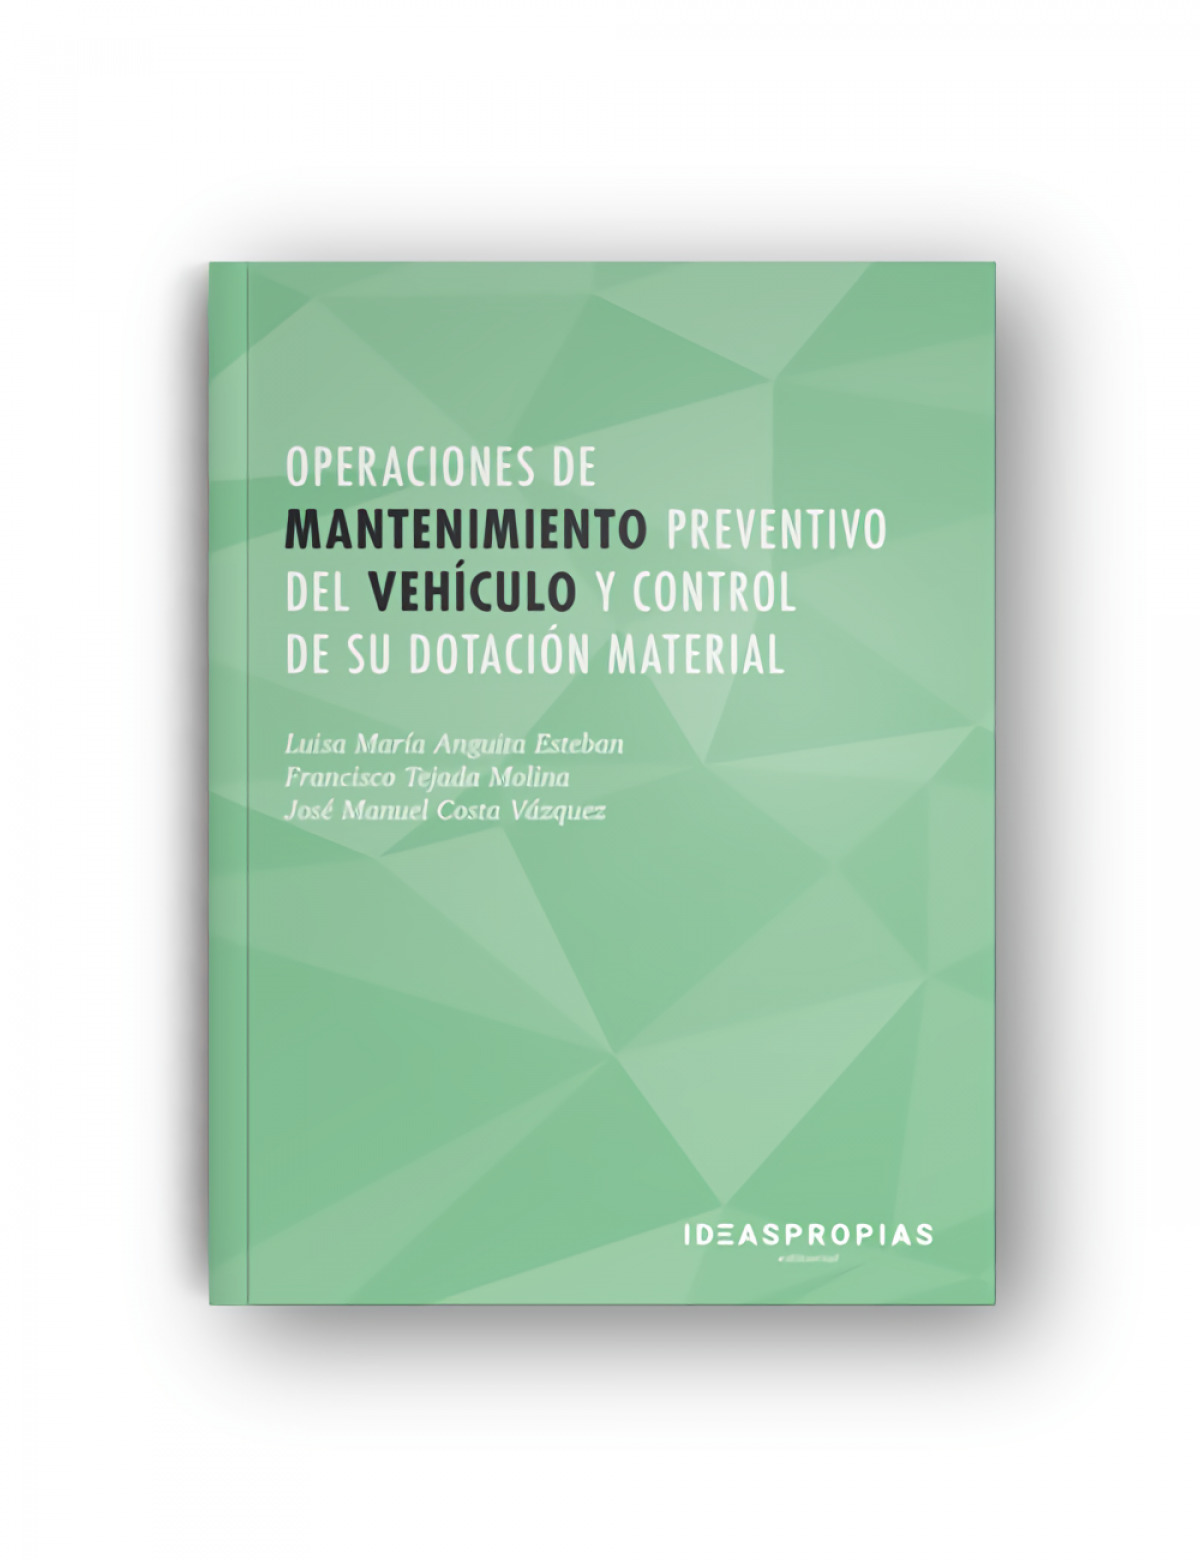 Oper.manten.preventivo vehiculo y control dotacion material - Jiménez Campos/Costa Vaquez/Pascual